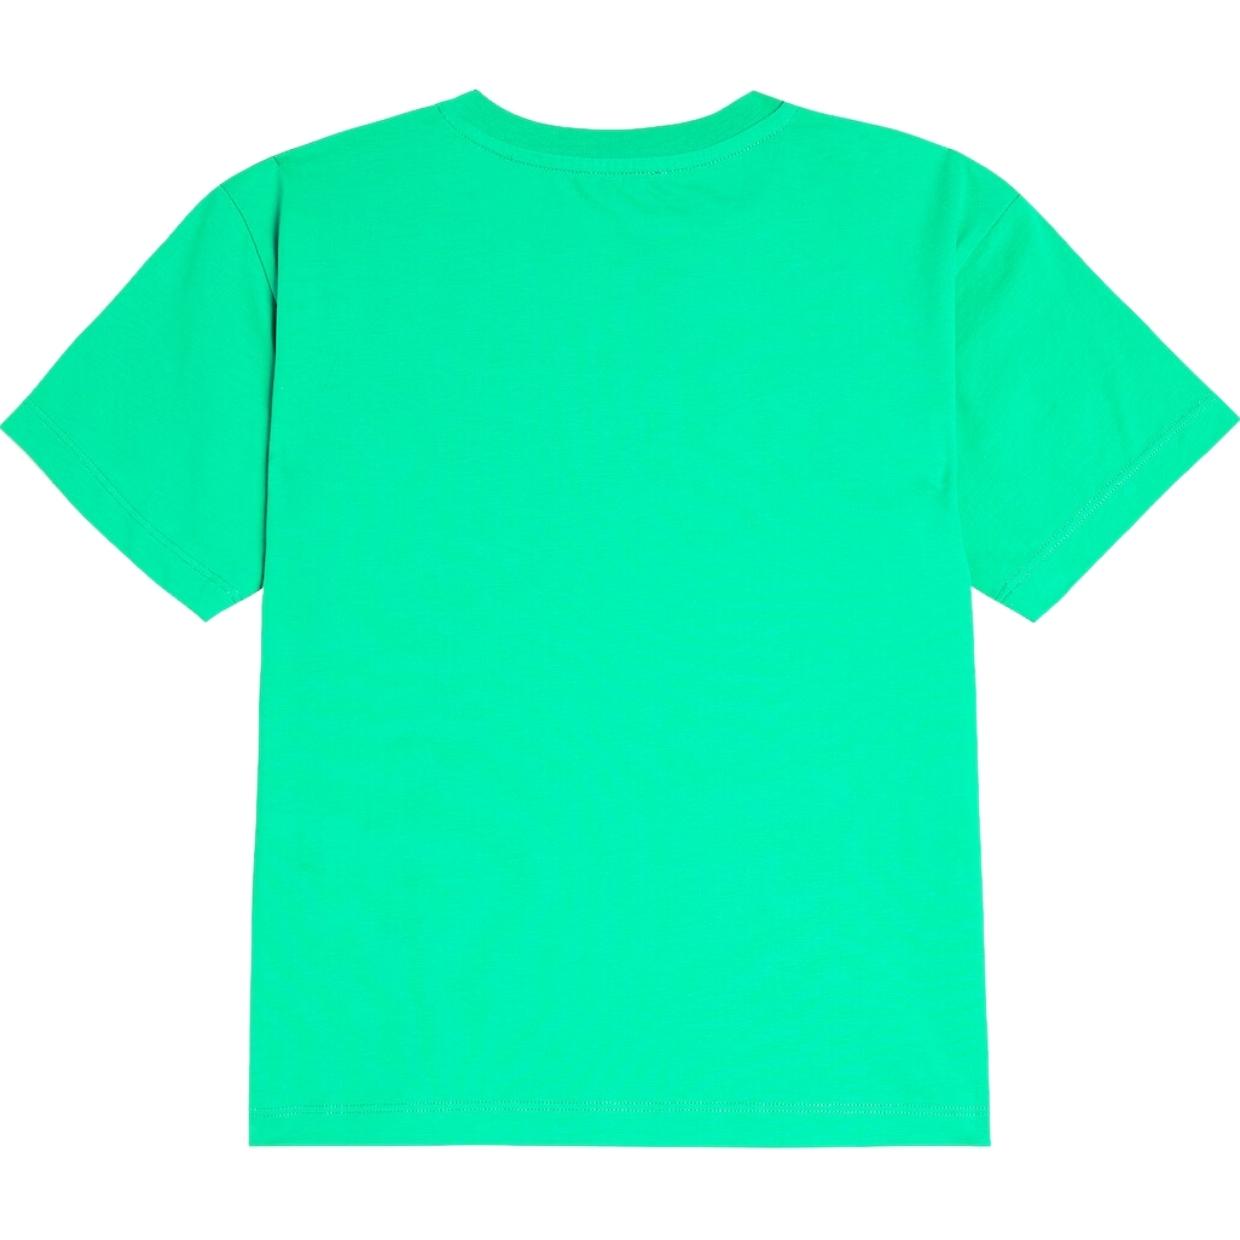 Balmain Kids Contrast Logo Green T-Shirt